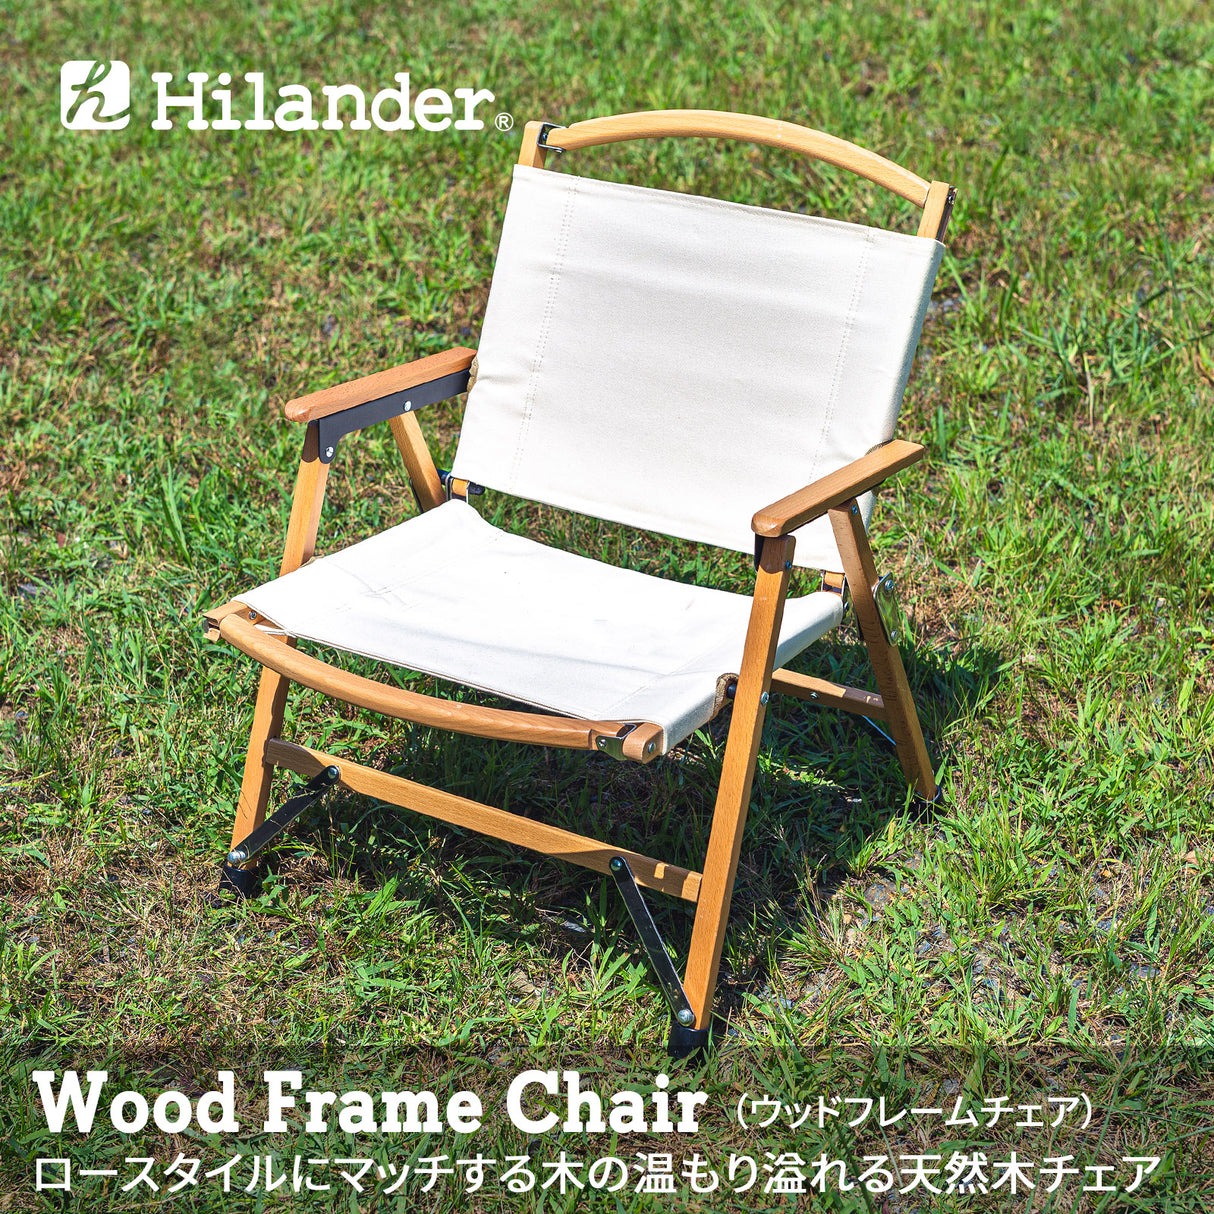 hilander-wood-flame-chair-ivory-hca0262-戶外露營椅產品介紹相片